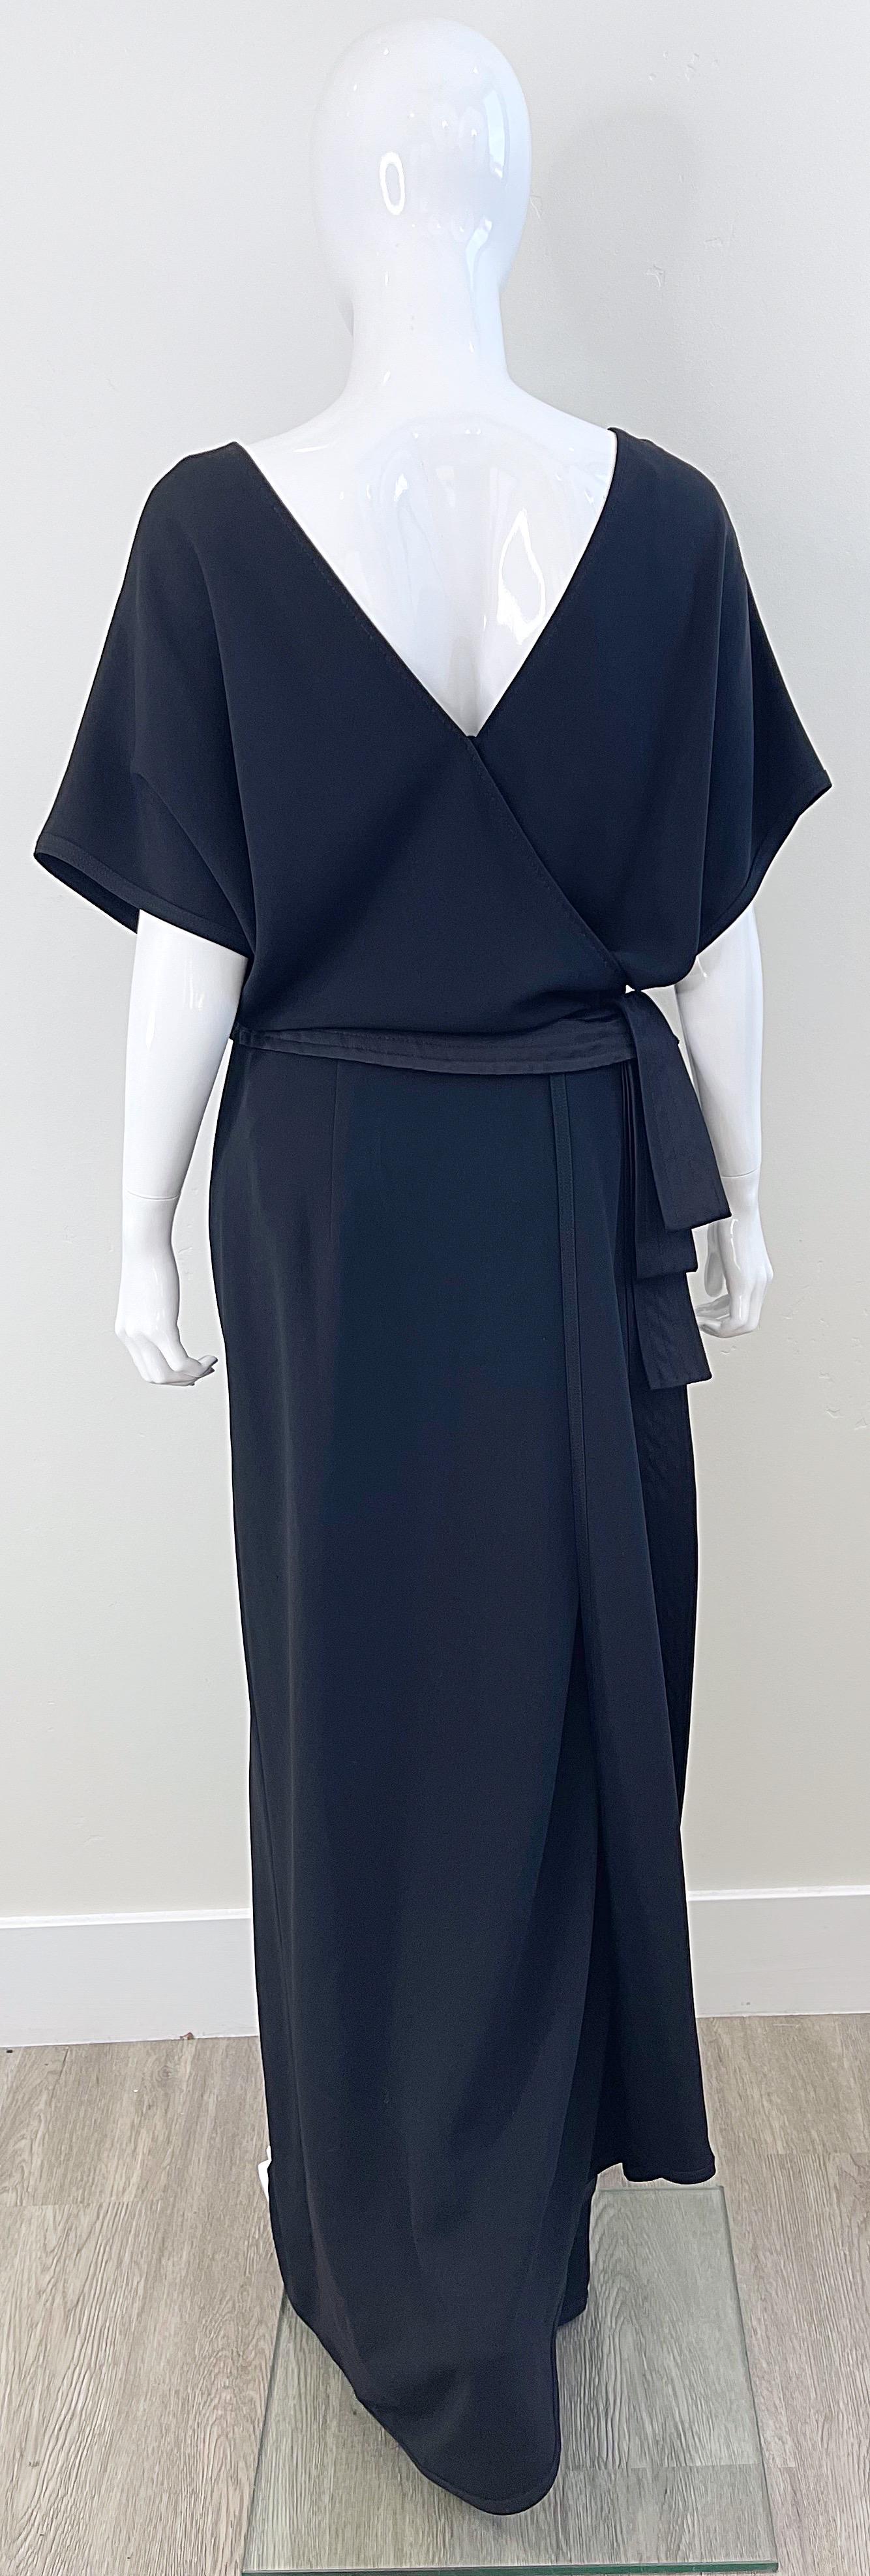 NWT Gianfranco Ferre 2000s Size 44 / 8 - 10 Black Dolman Sleeve Gown Maxi Dress For Sale 7